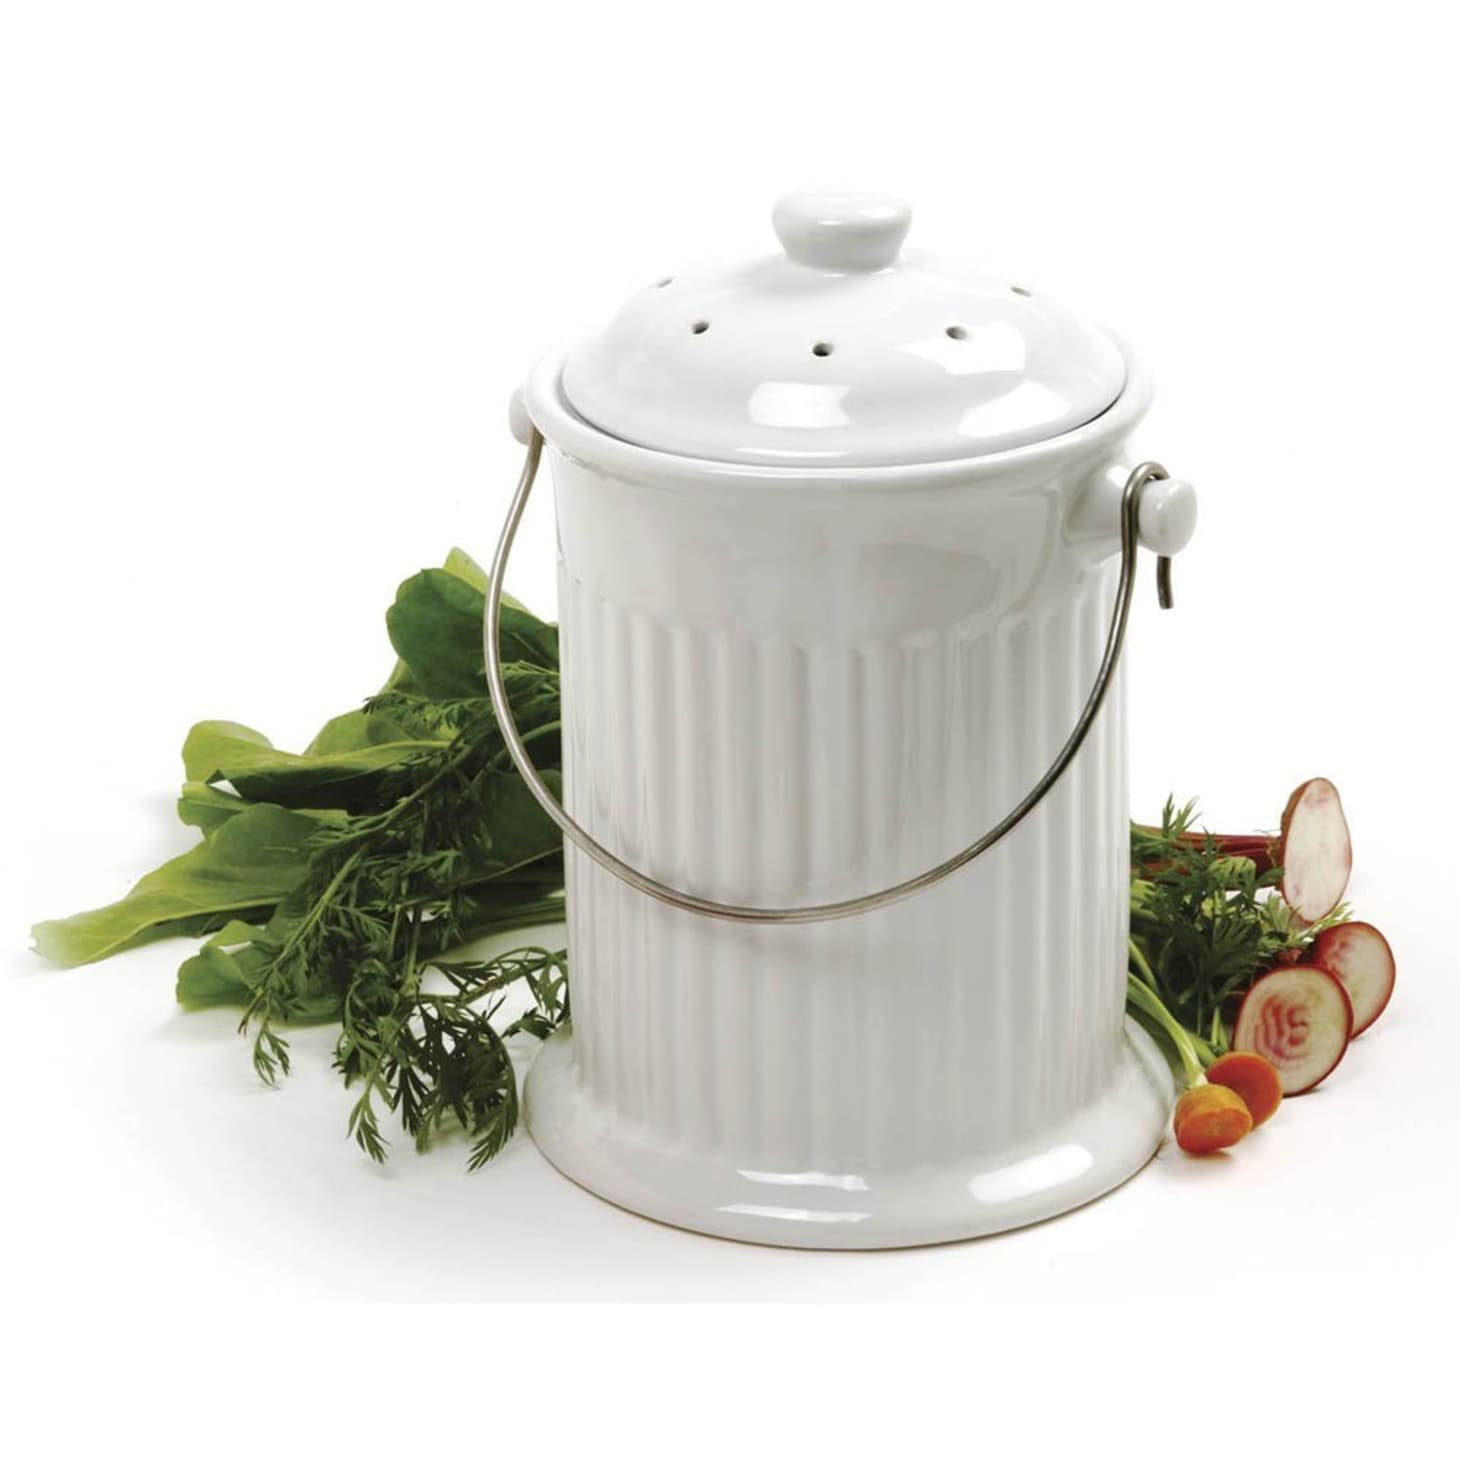 The Best Looking Indoor Composting Bins For Your Kitchen